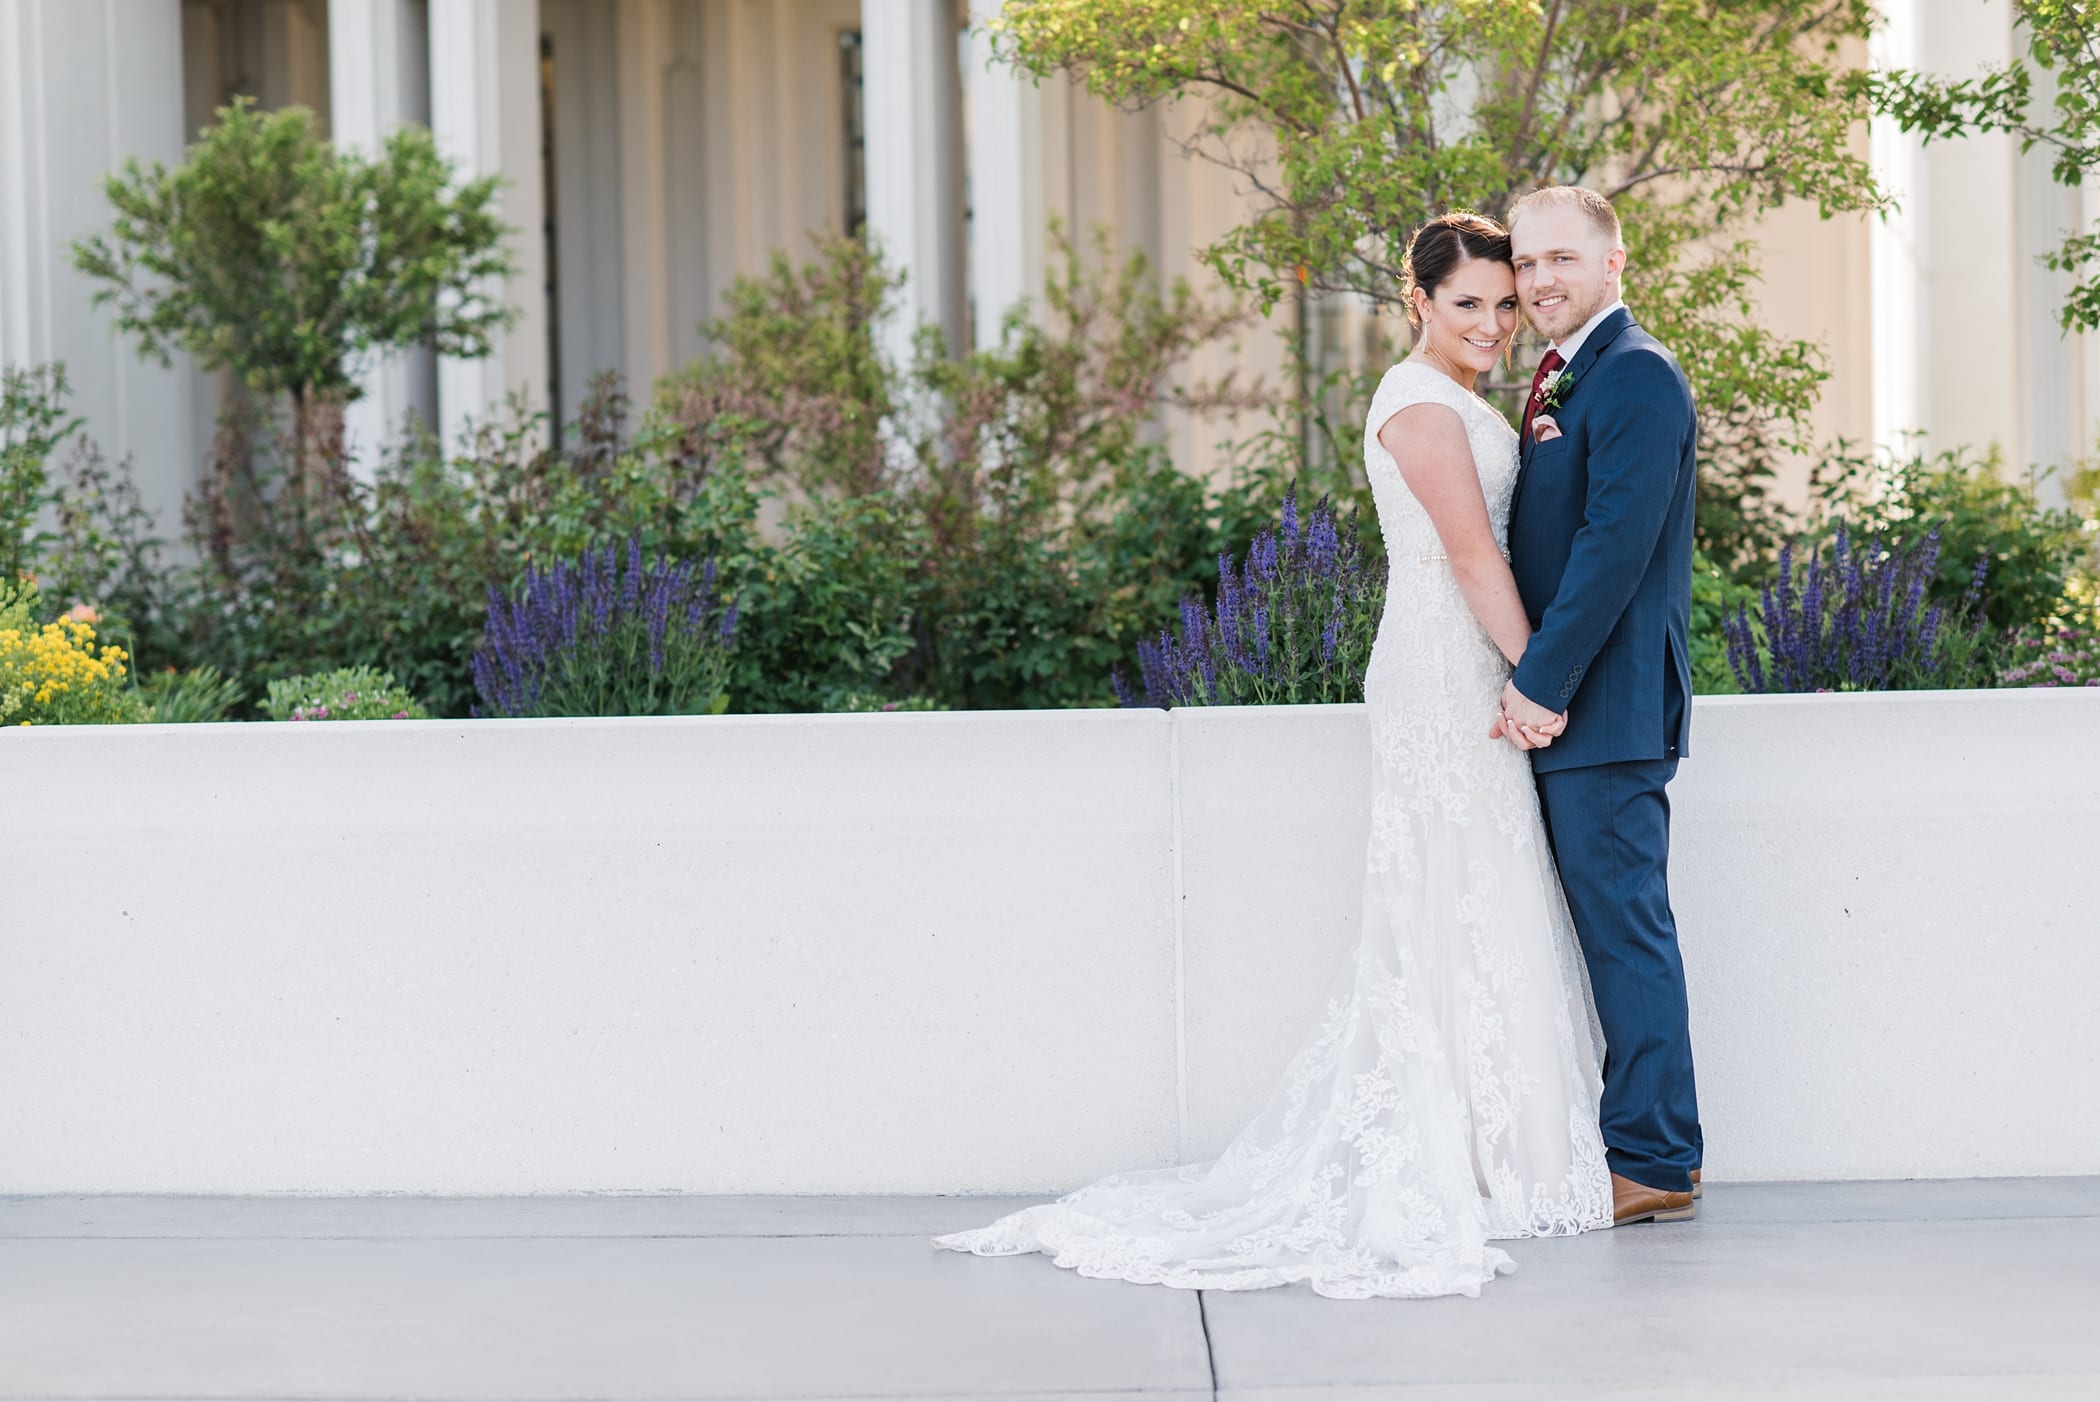 Rexburg LDS Temple Wedding | First Look | Golden hour mountain Formals | Michelle & Logan